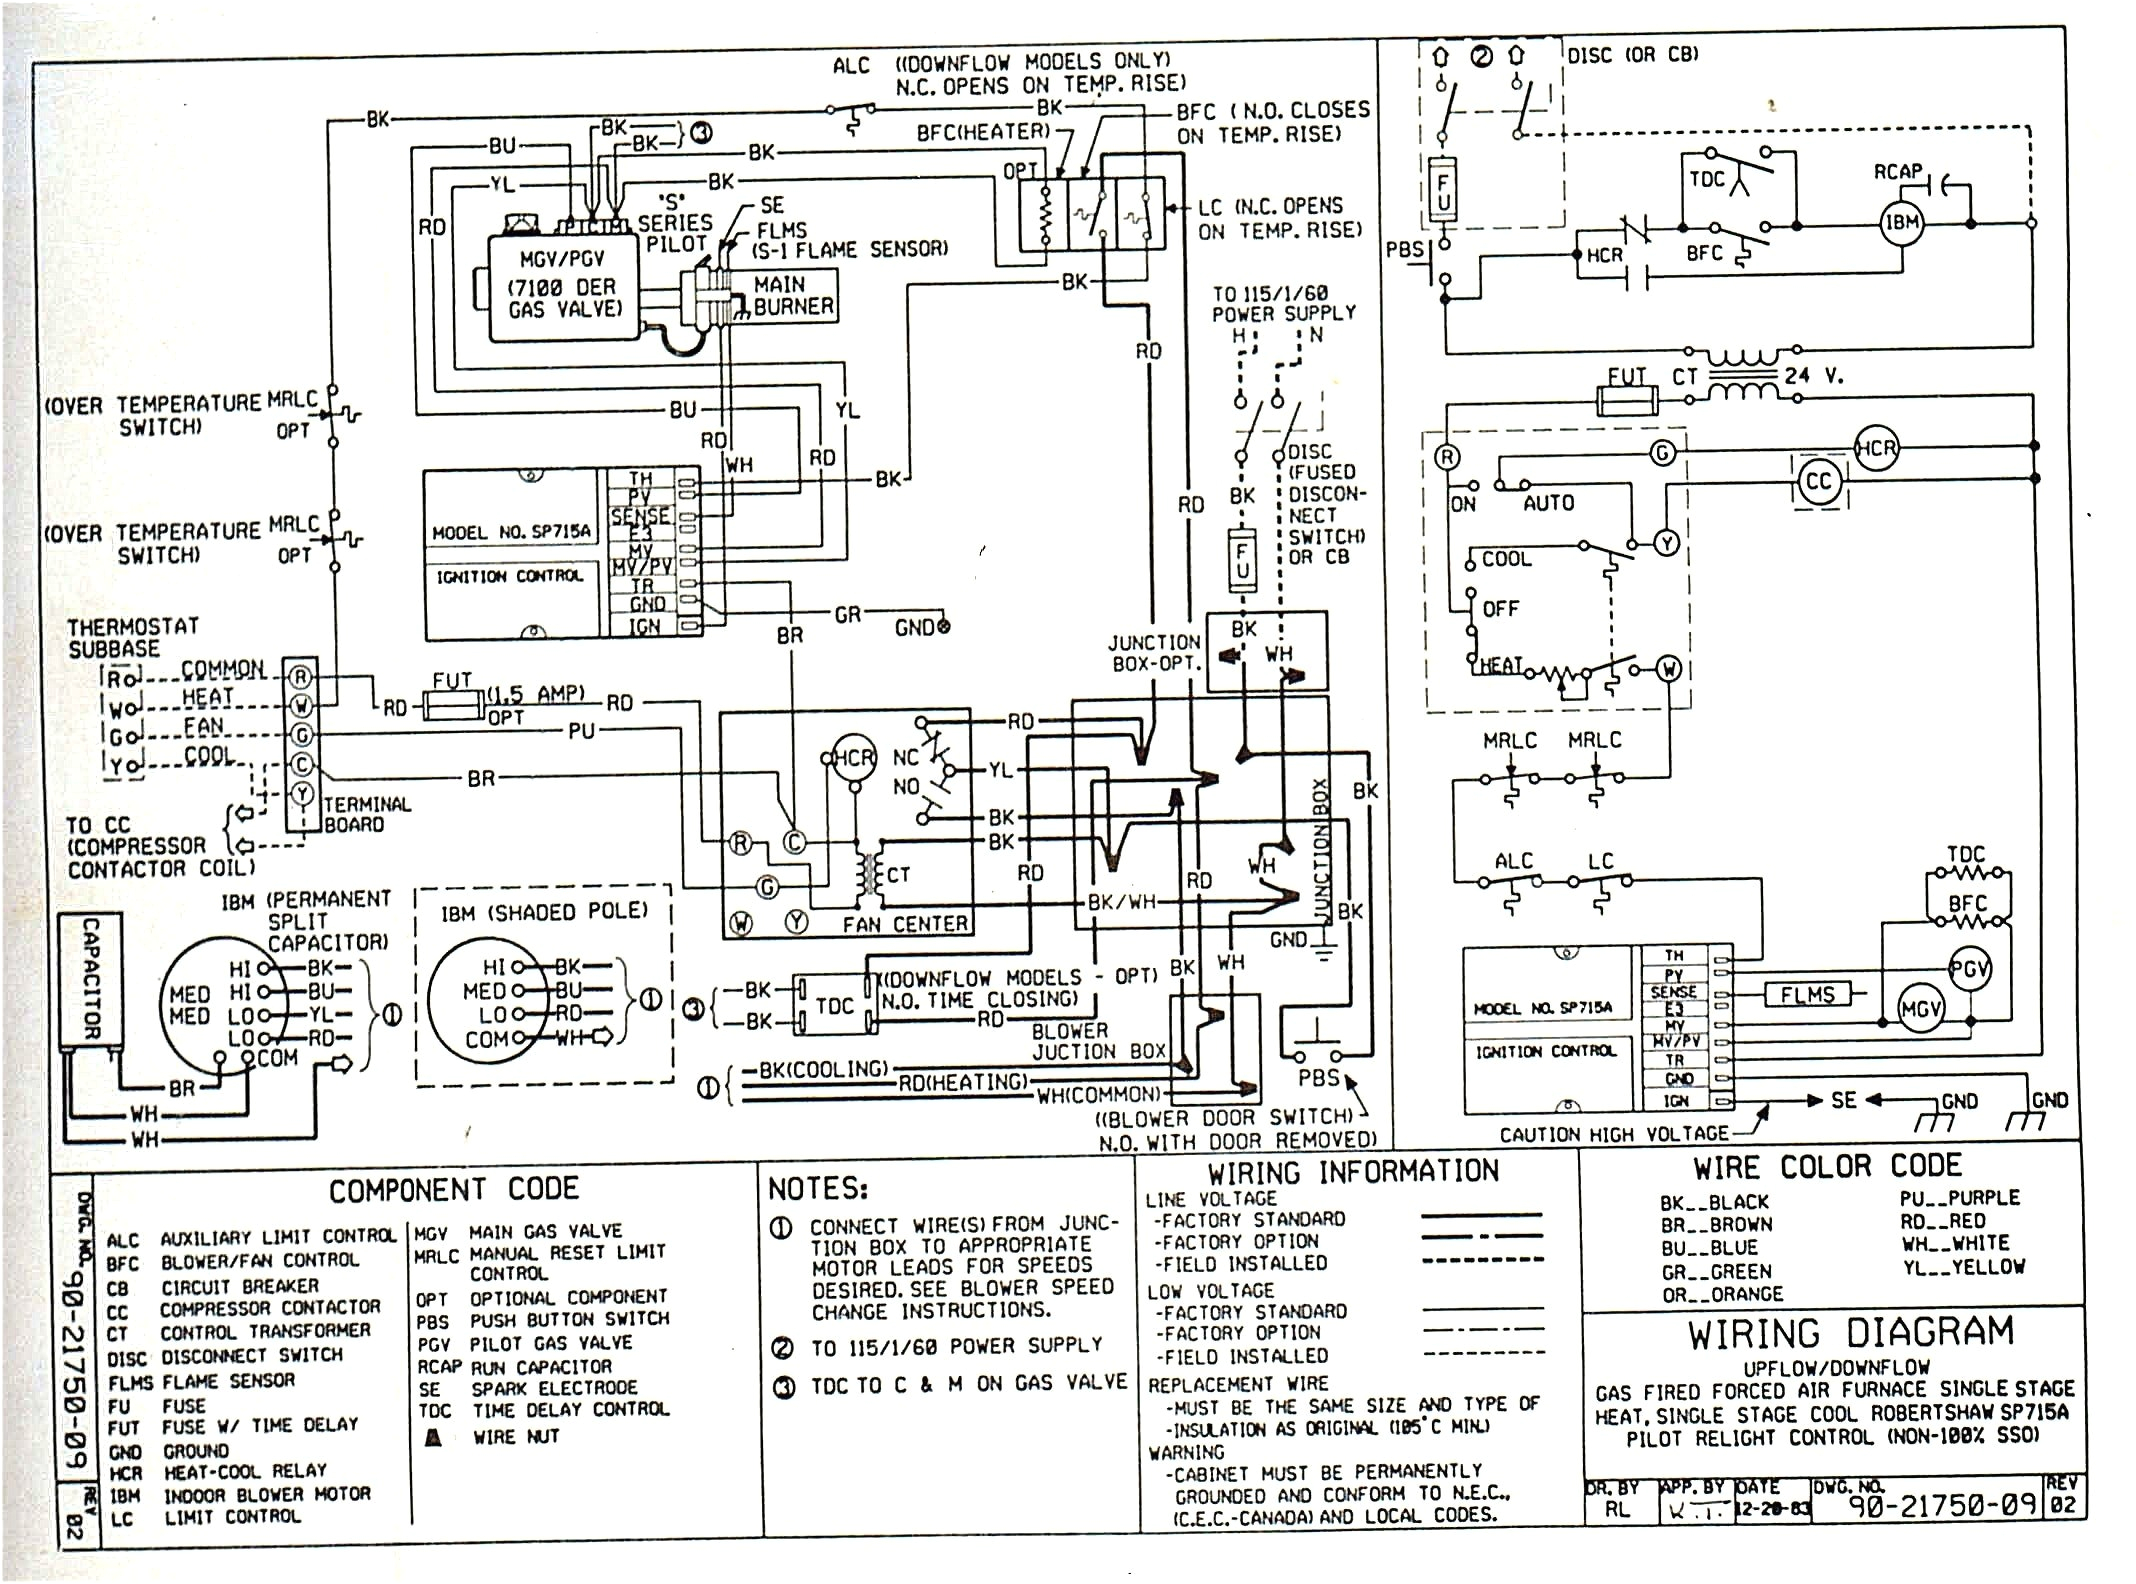 old furnace wiring diagram wiring diagram database simple series circuit diagram circuit diagrams for the od